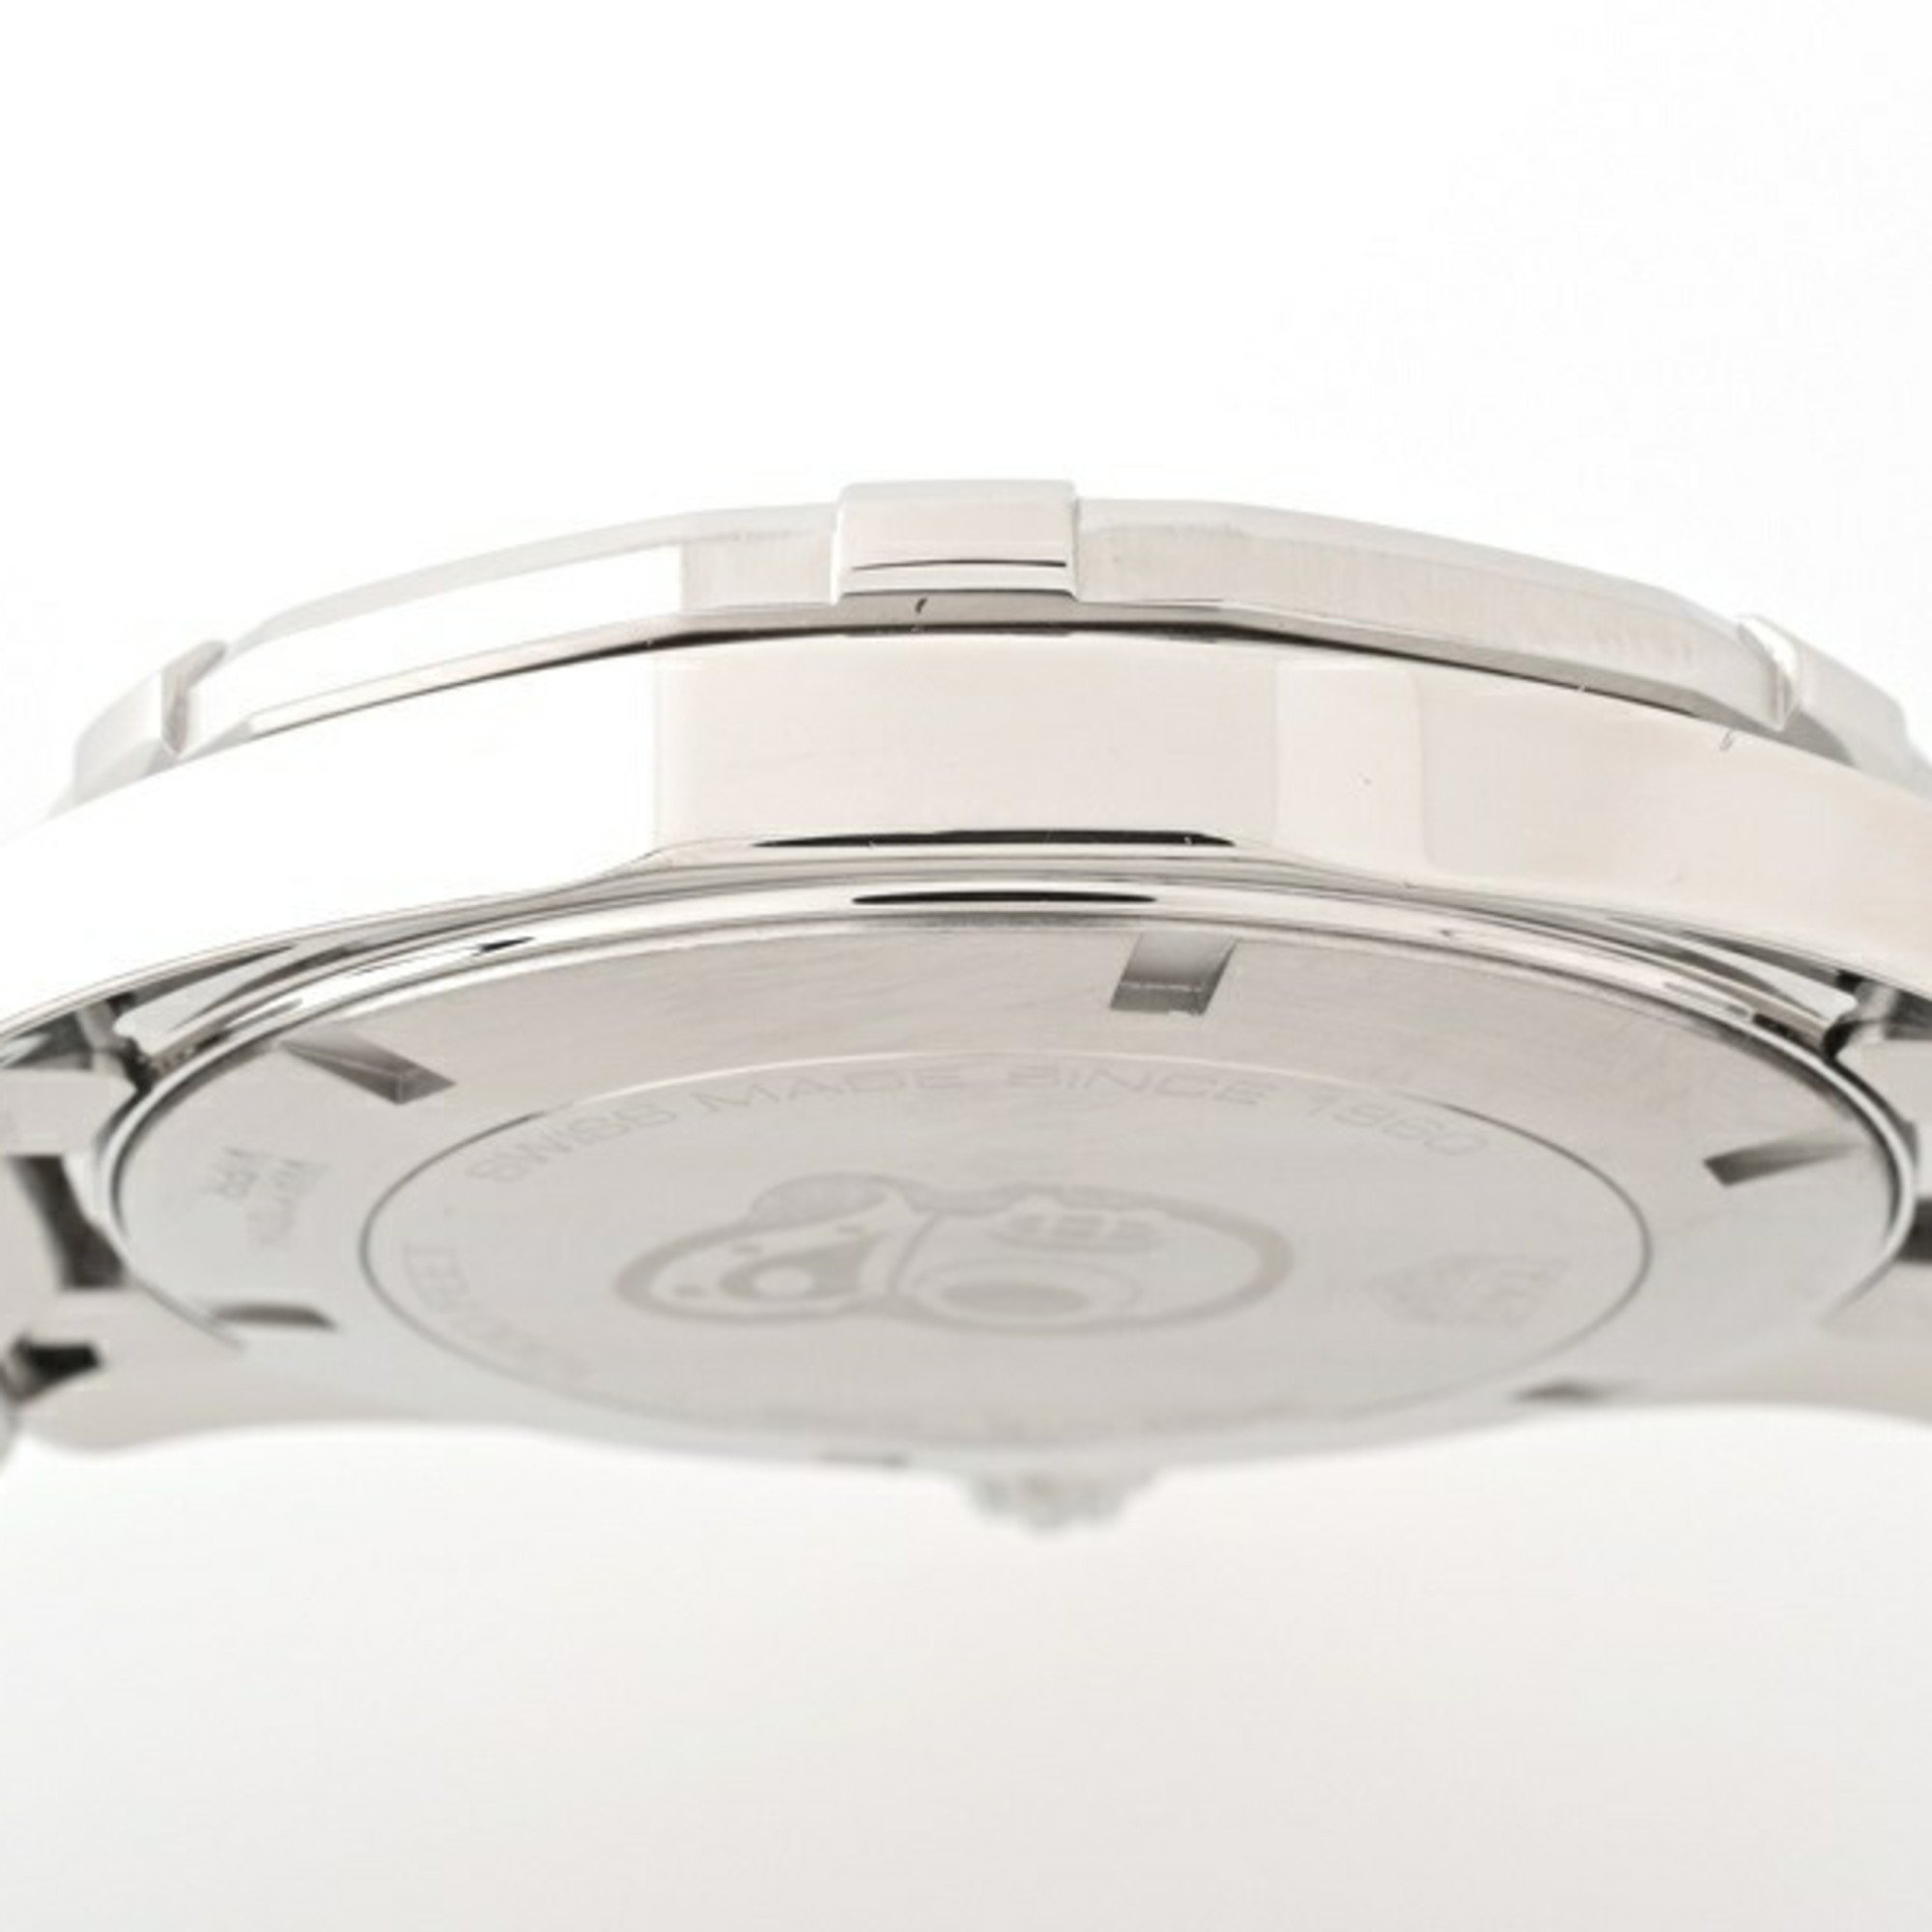 TAG Heuer Aquaracer watch WAY101A Quartz E-154970